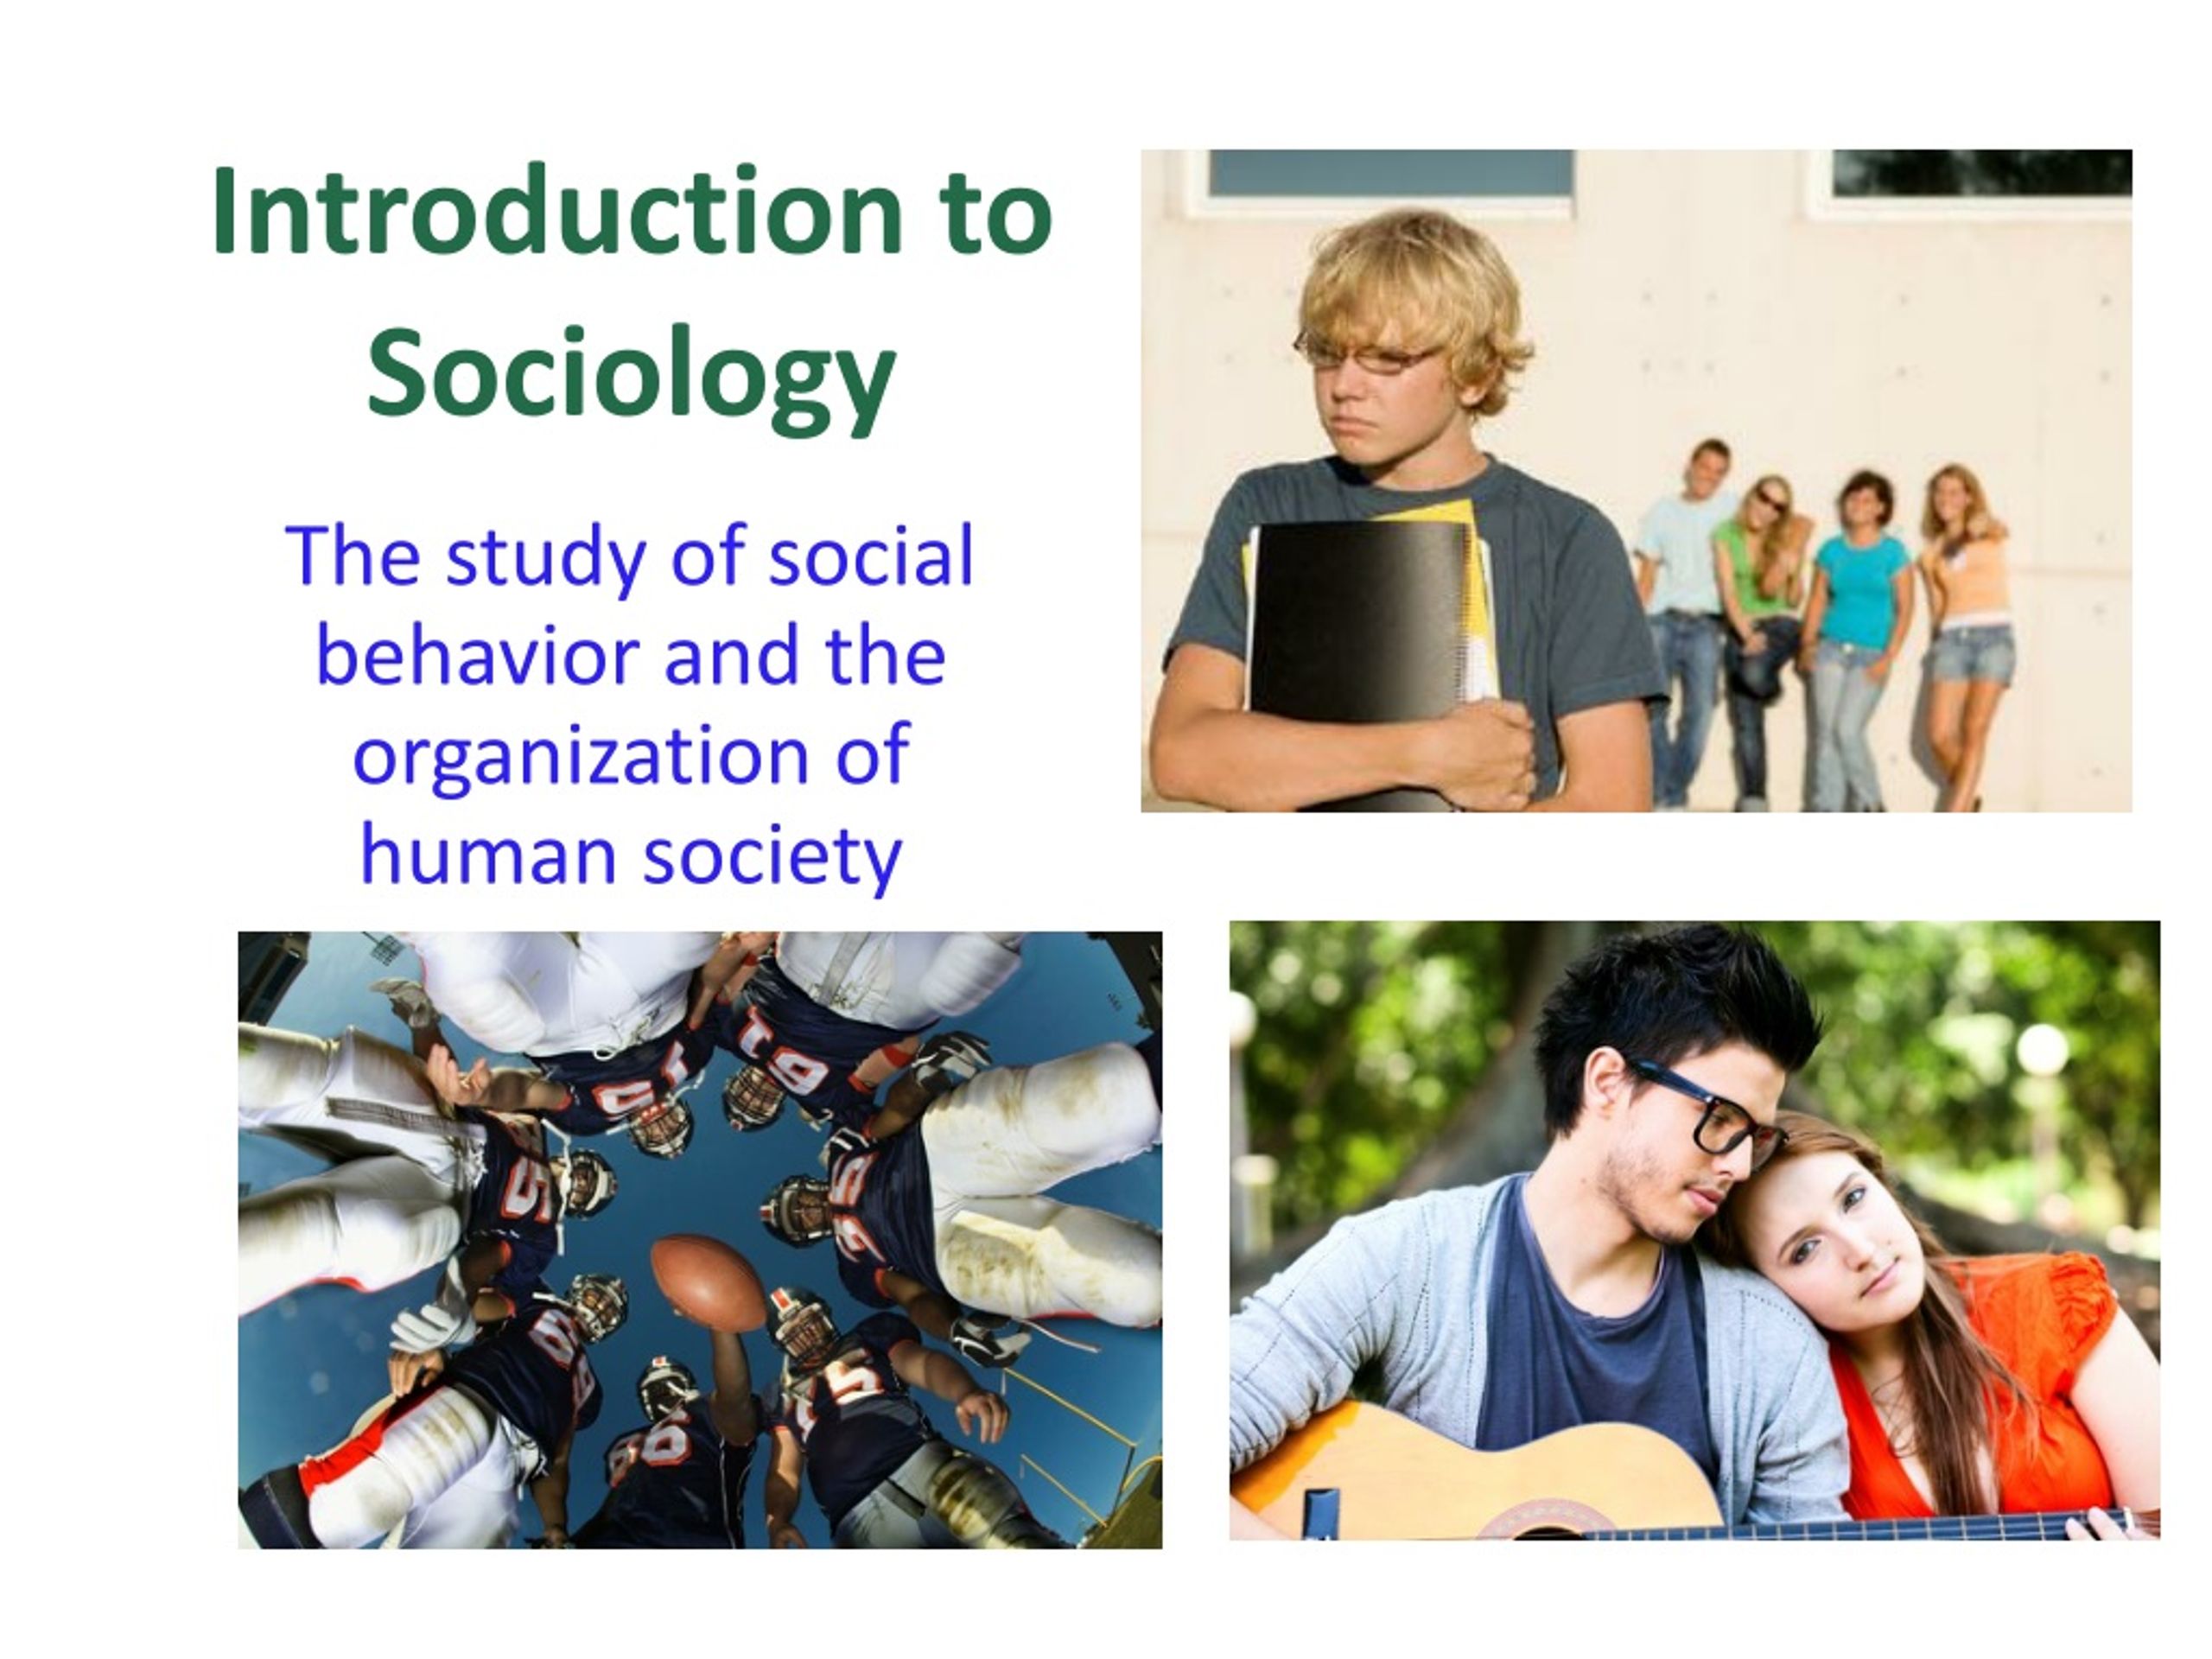 presentation on sociology topics